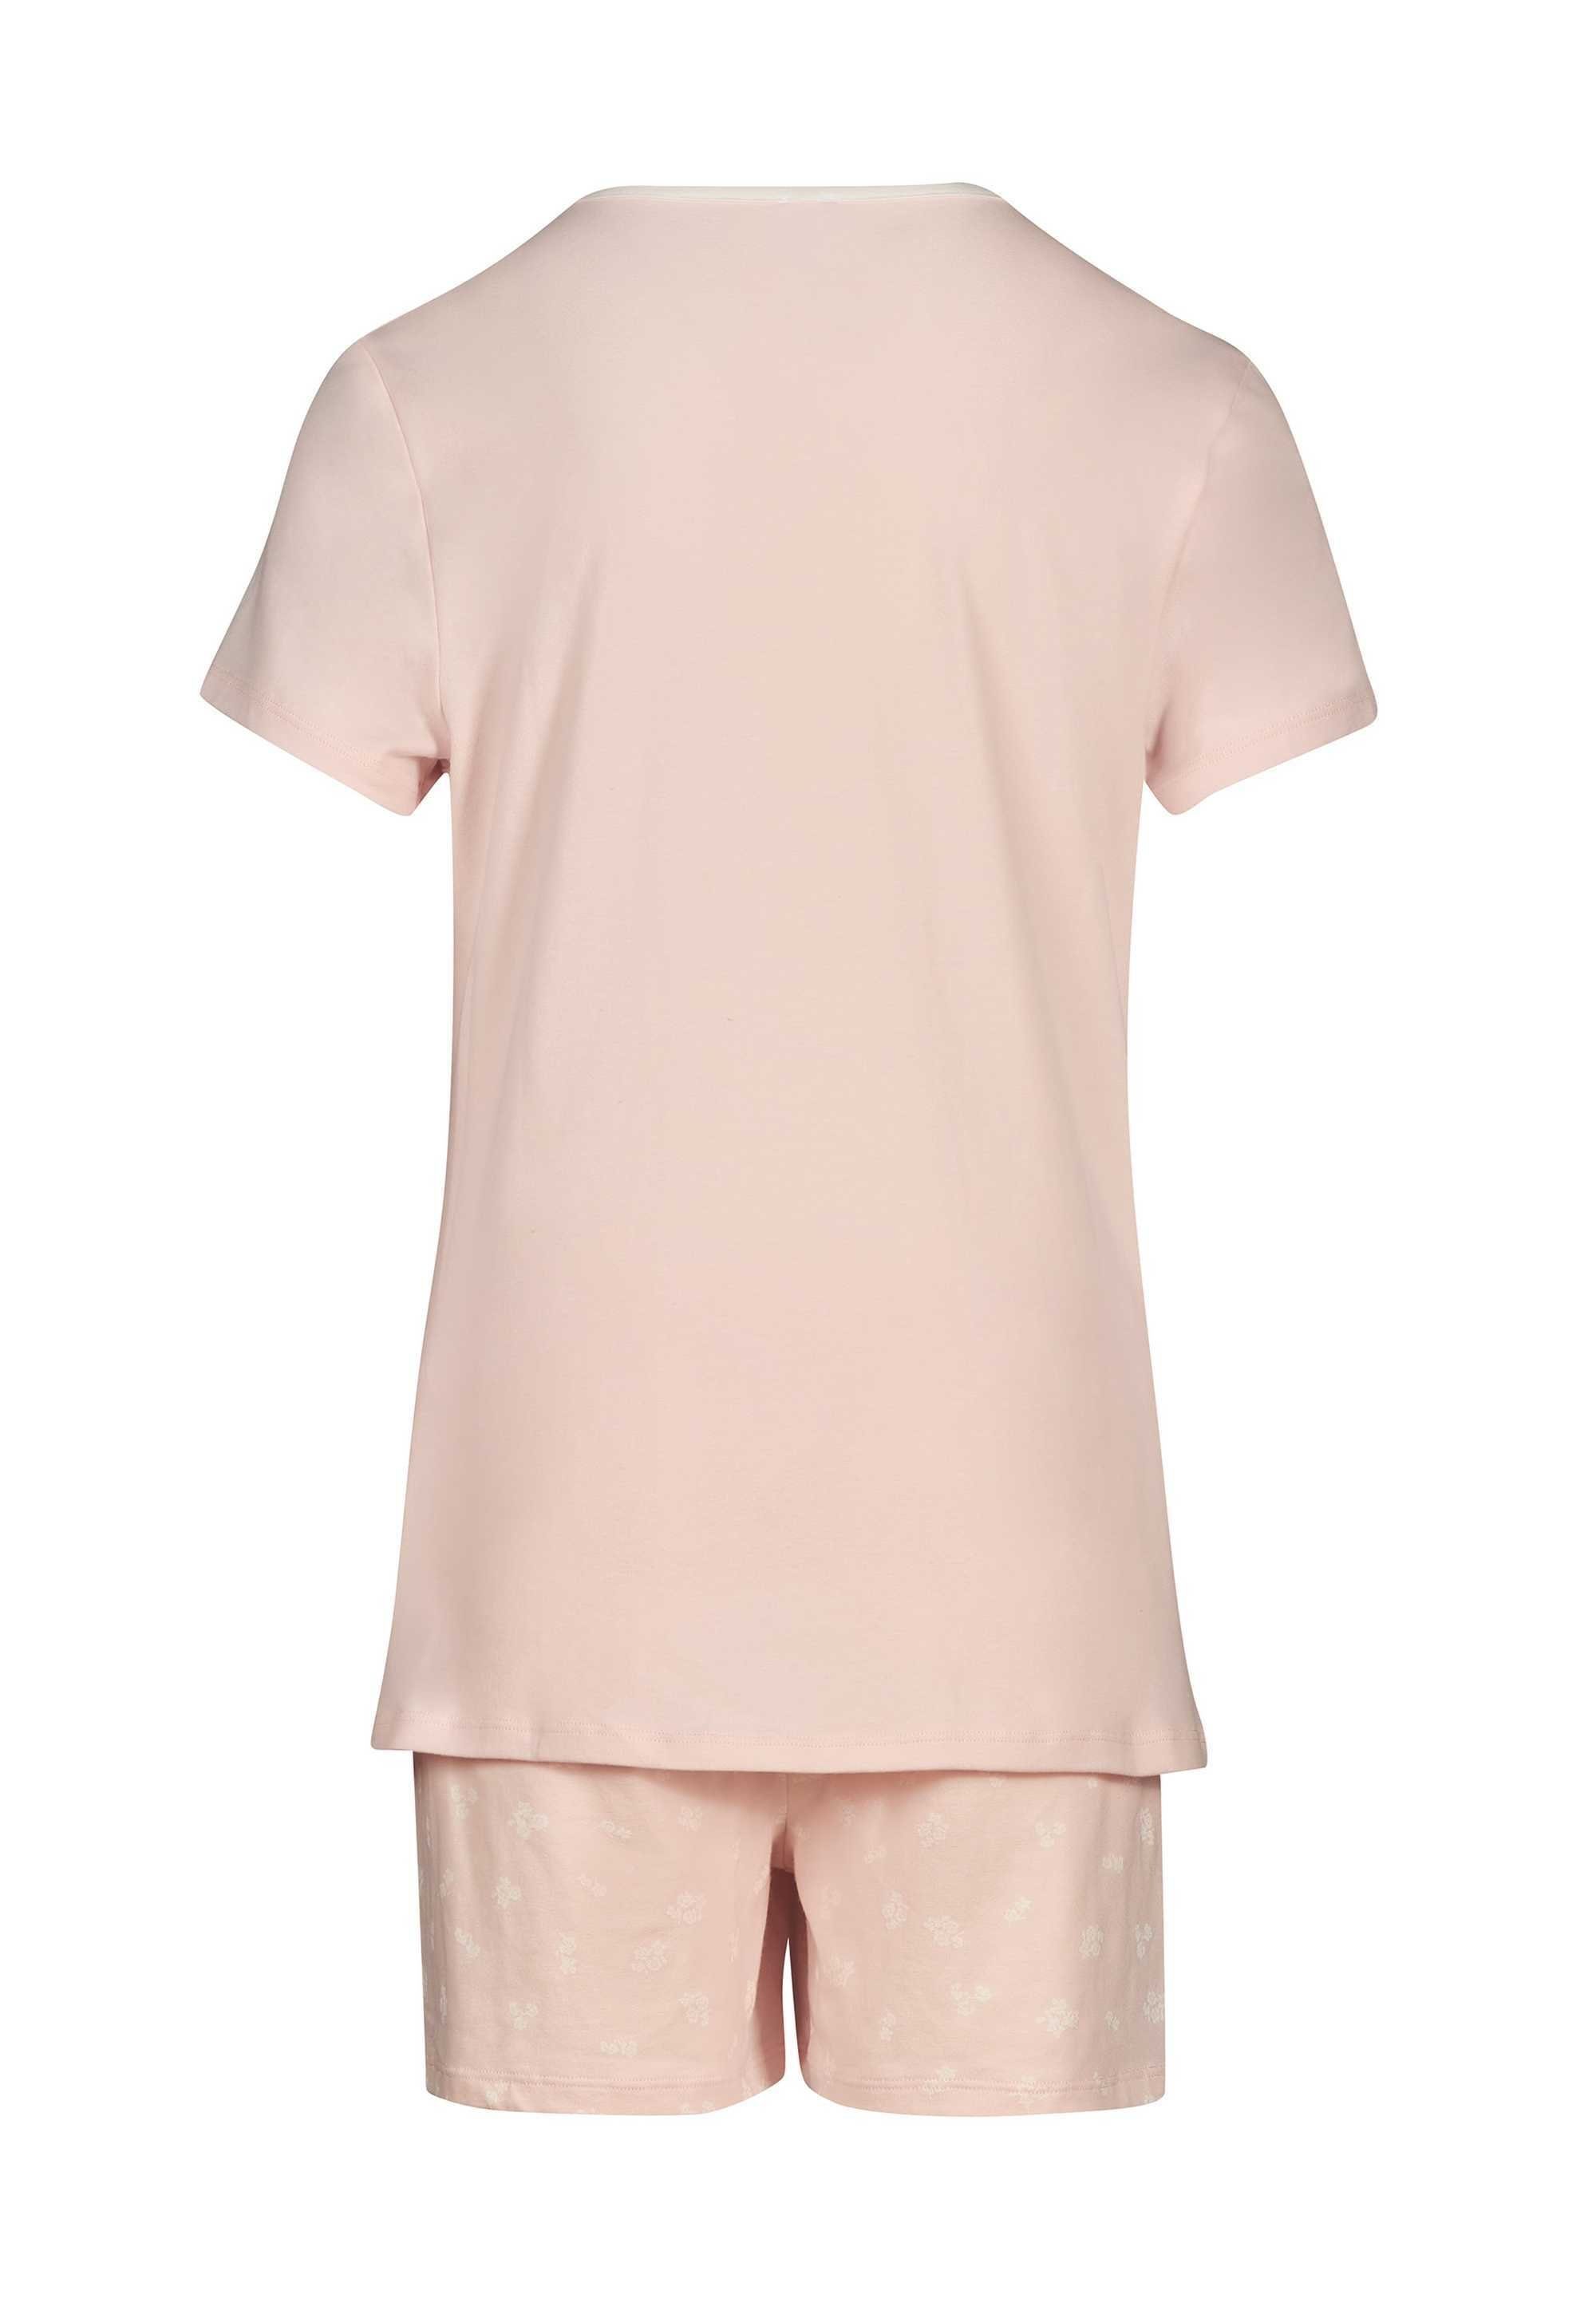 kurz, Rosa Schlafanzug Set Mädchen Skiny Pyjama - Kinder, 2-tlg.